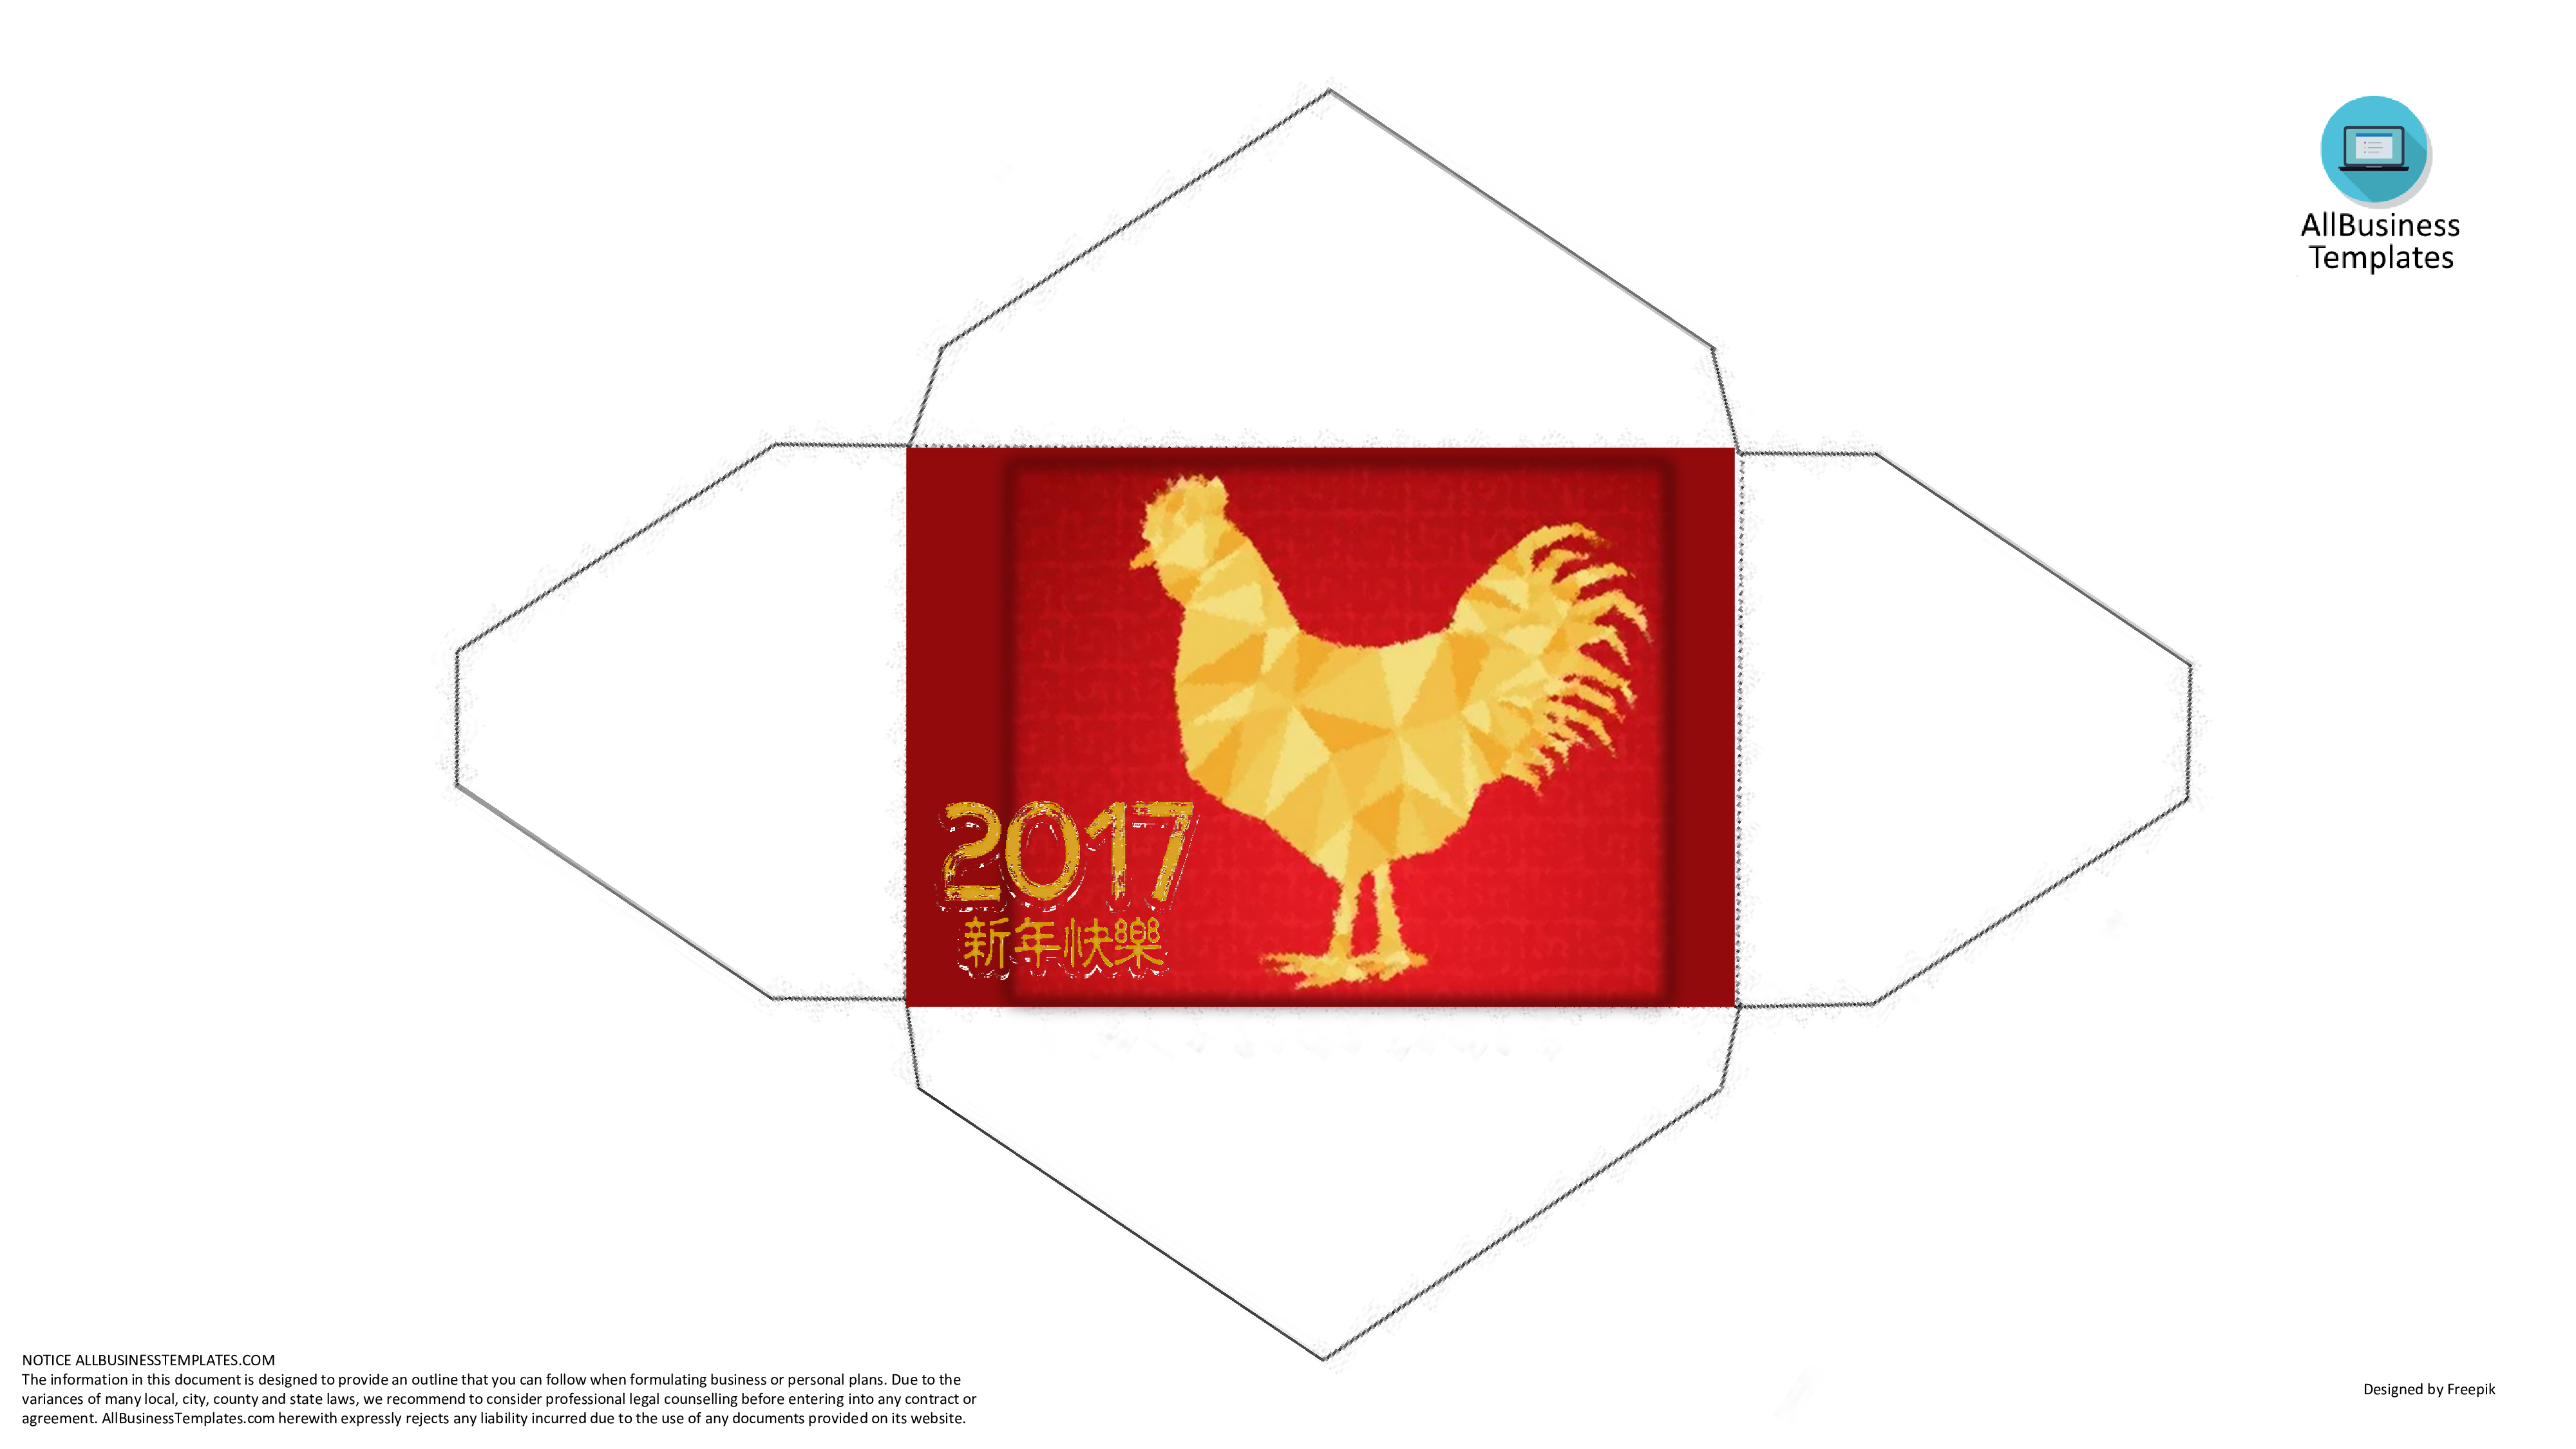 Spring festival 2017 Rooster red envelope main image